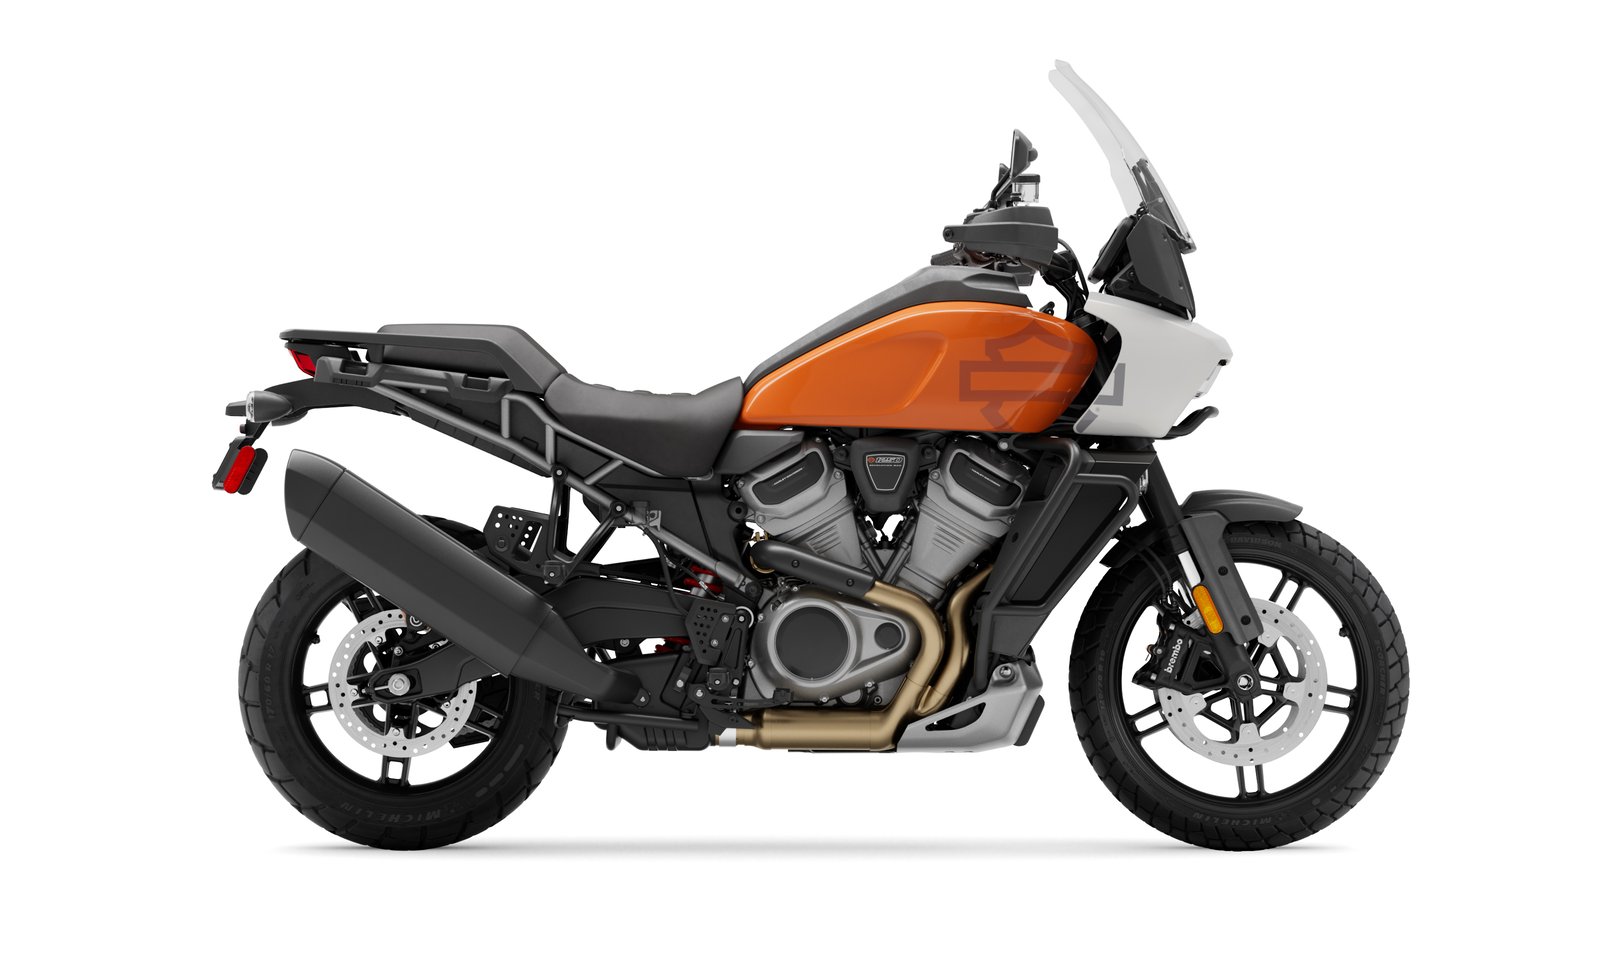 Jual Daytona Spion High Visibility Parallel Untuk Harley Davidson Original Webike Indonesia